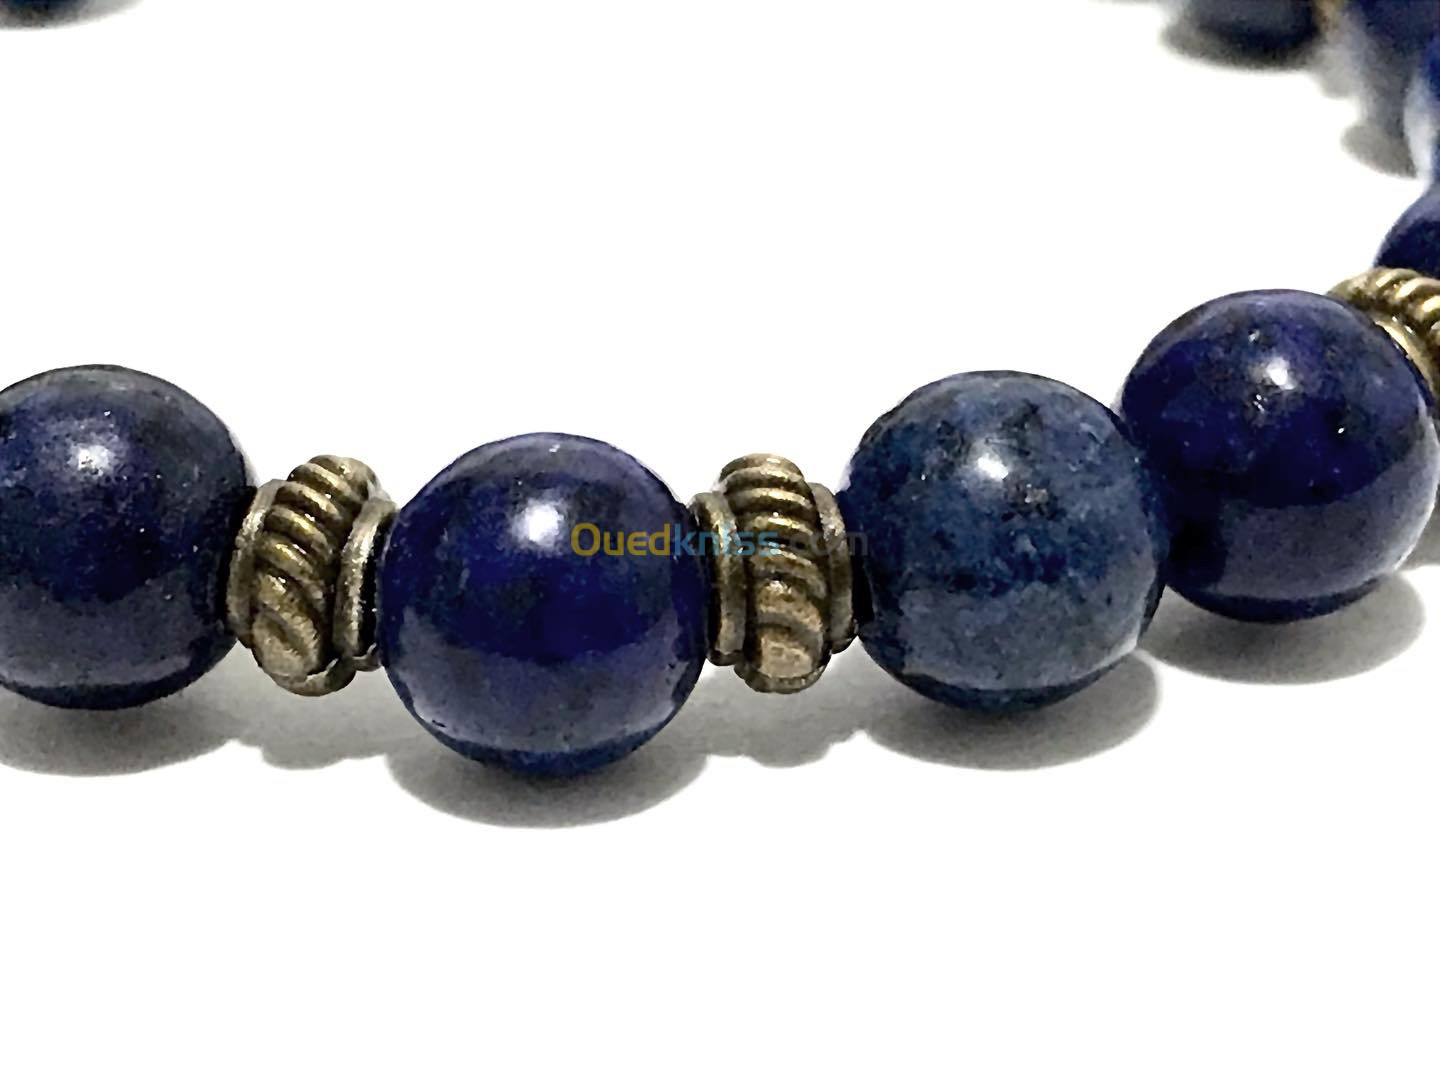 Bracelet Lapis-lazuli 